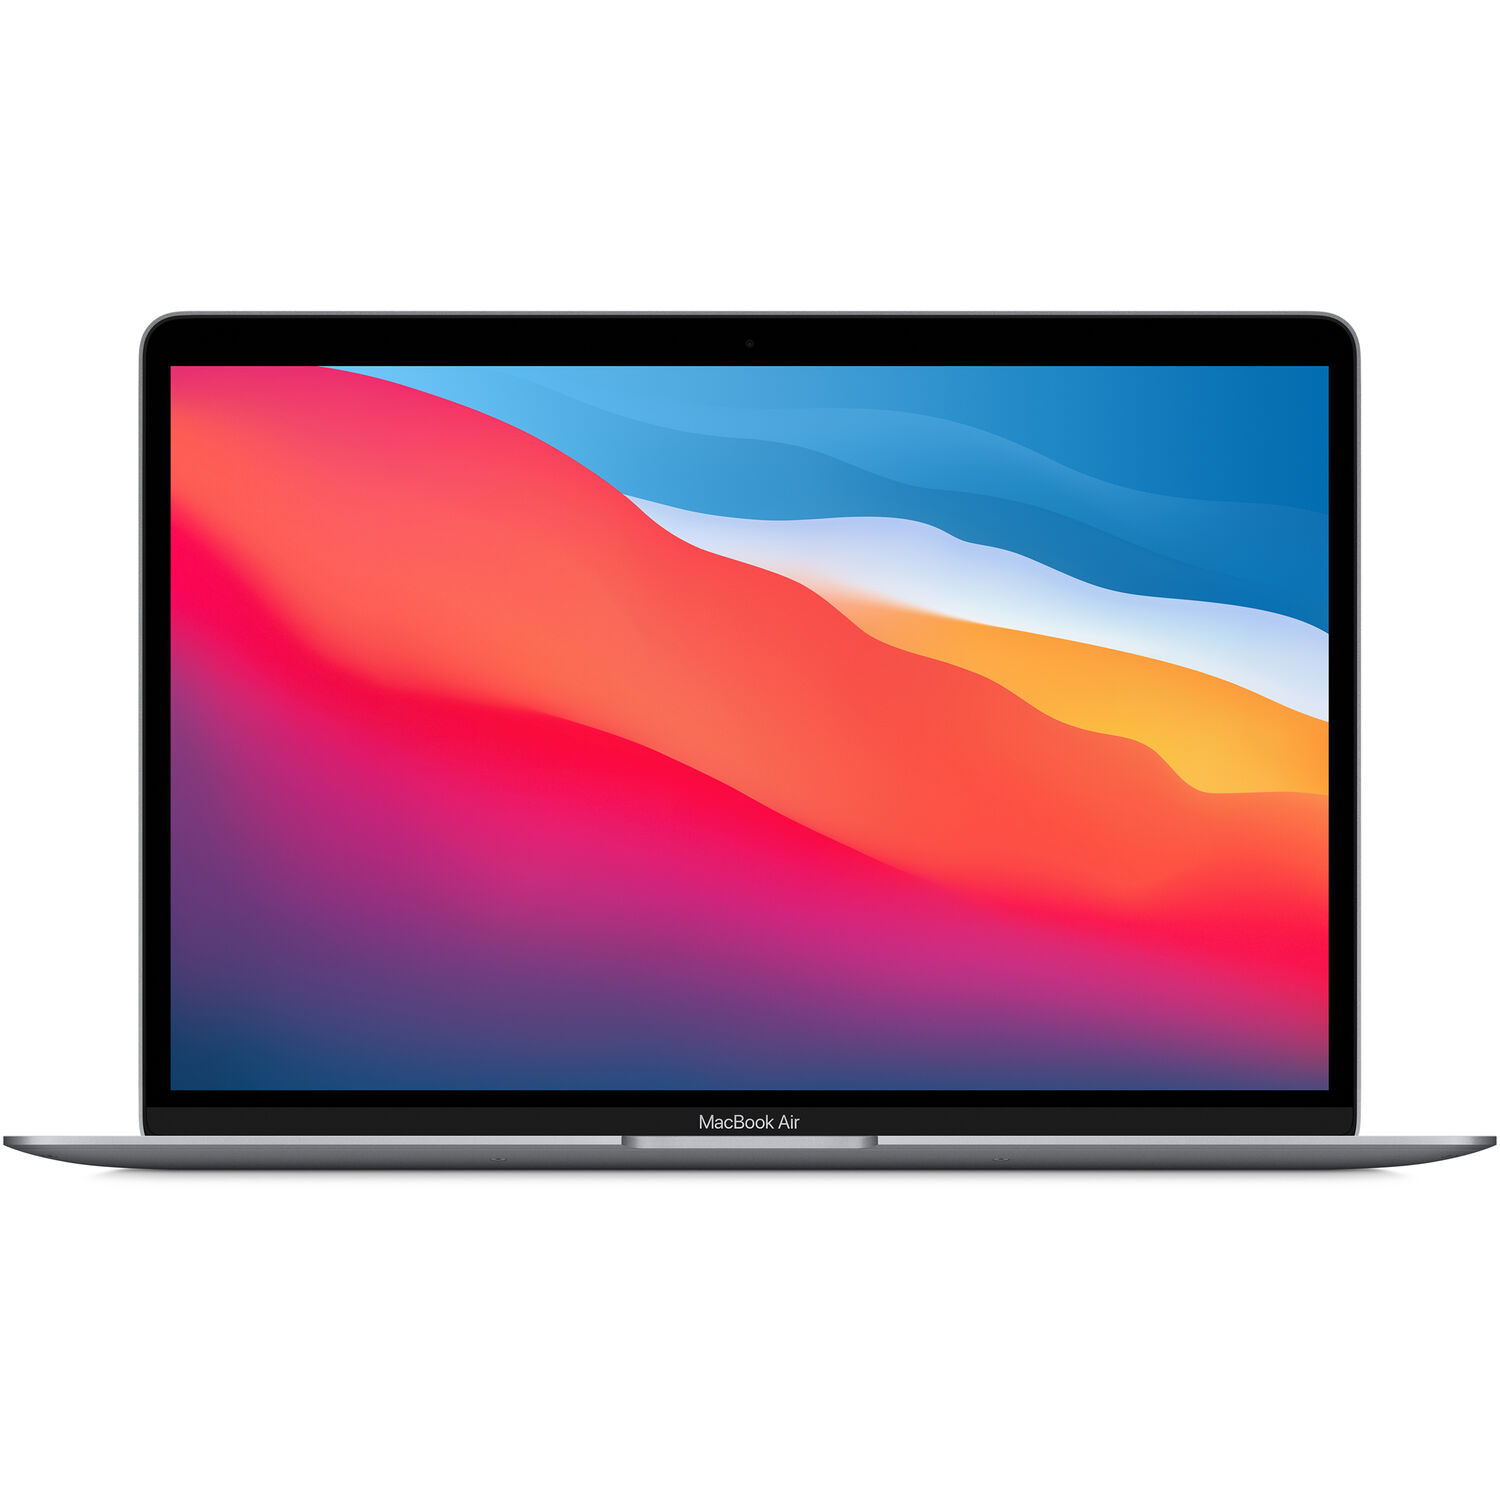 Portátil Apple 13.3 Macbook Air M1 Chip con Pantalla Retina Late 2020 Gris Espacial